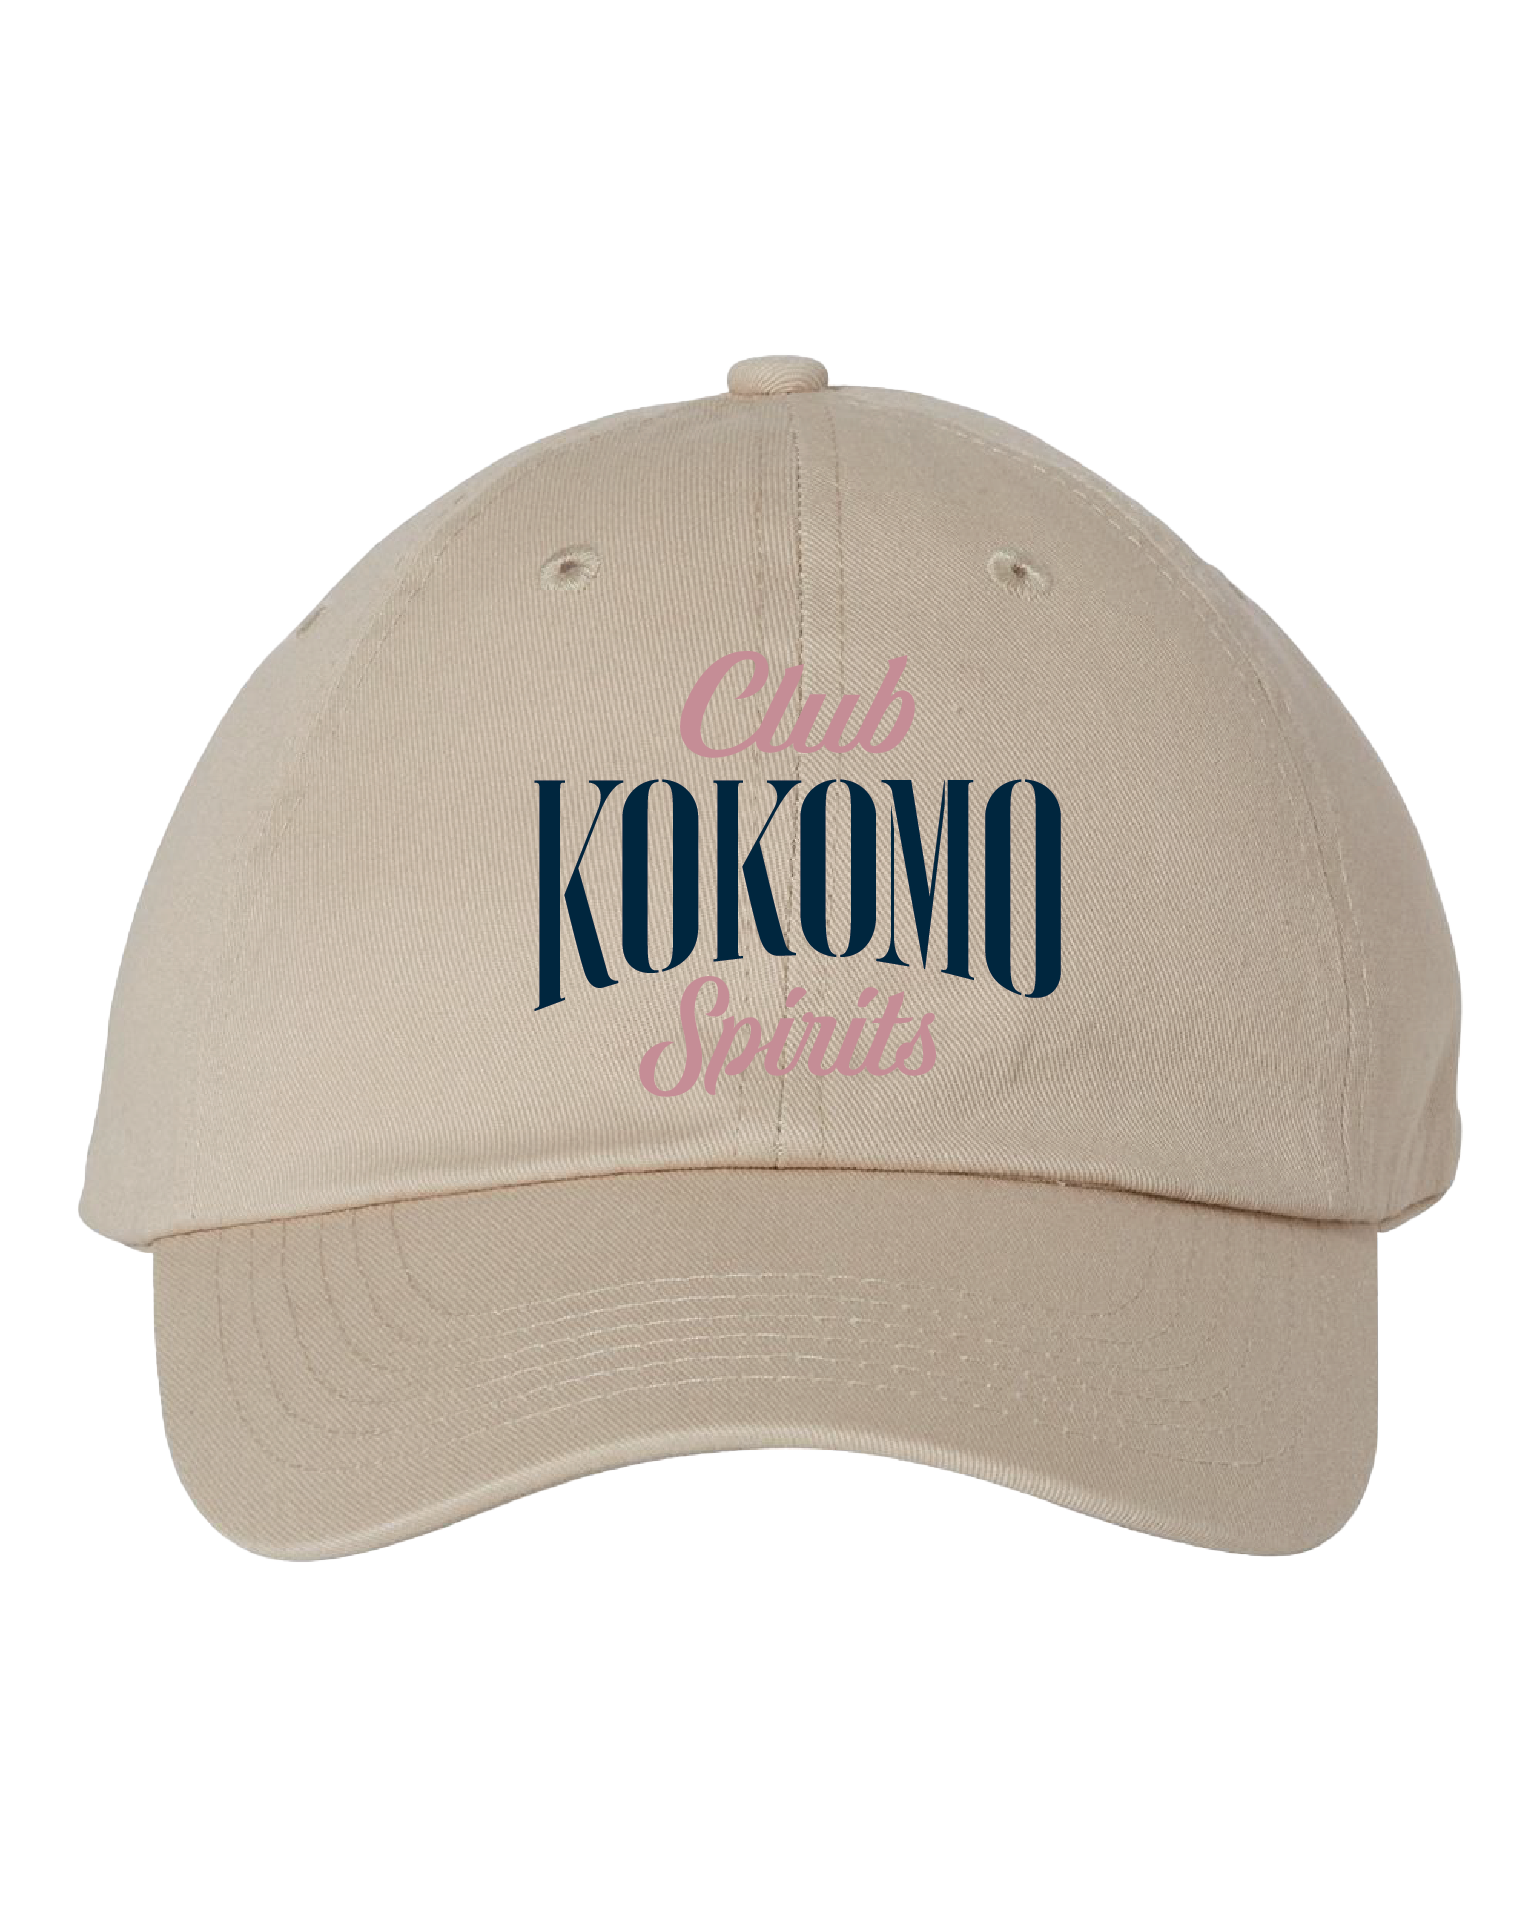 Club Kokomo Dad Hat